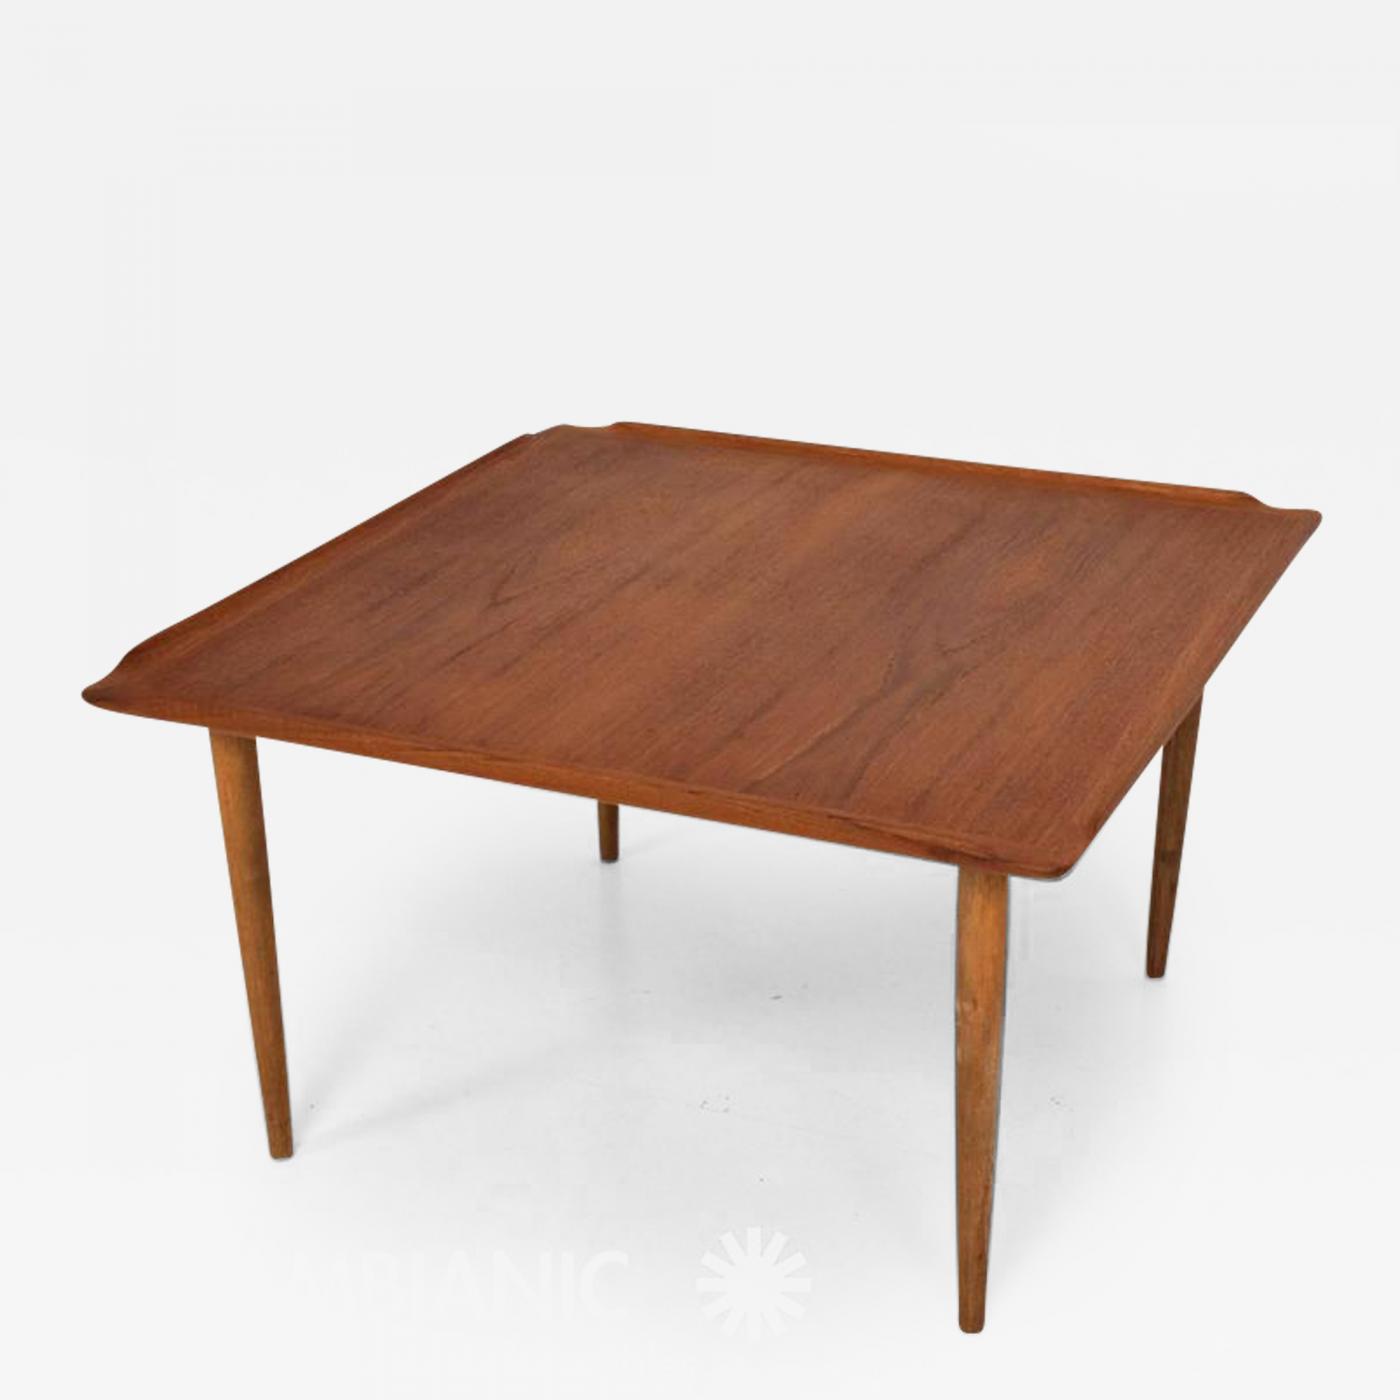 Selig Furniture Co Selig Simple Sculptural Square Scandinavian Teak Coffee Table 1960s